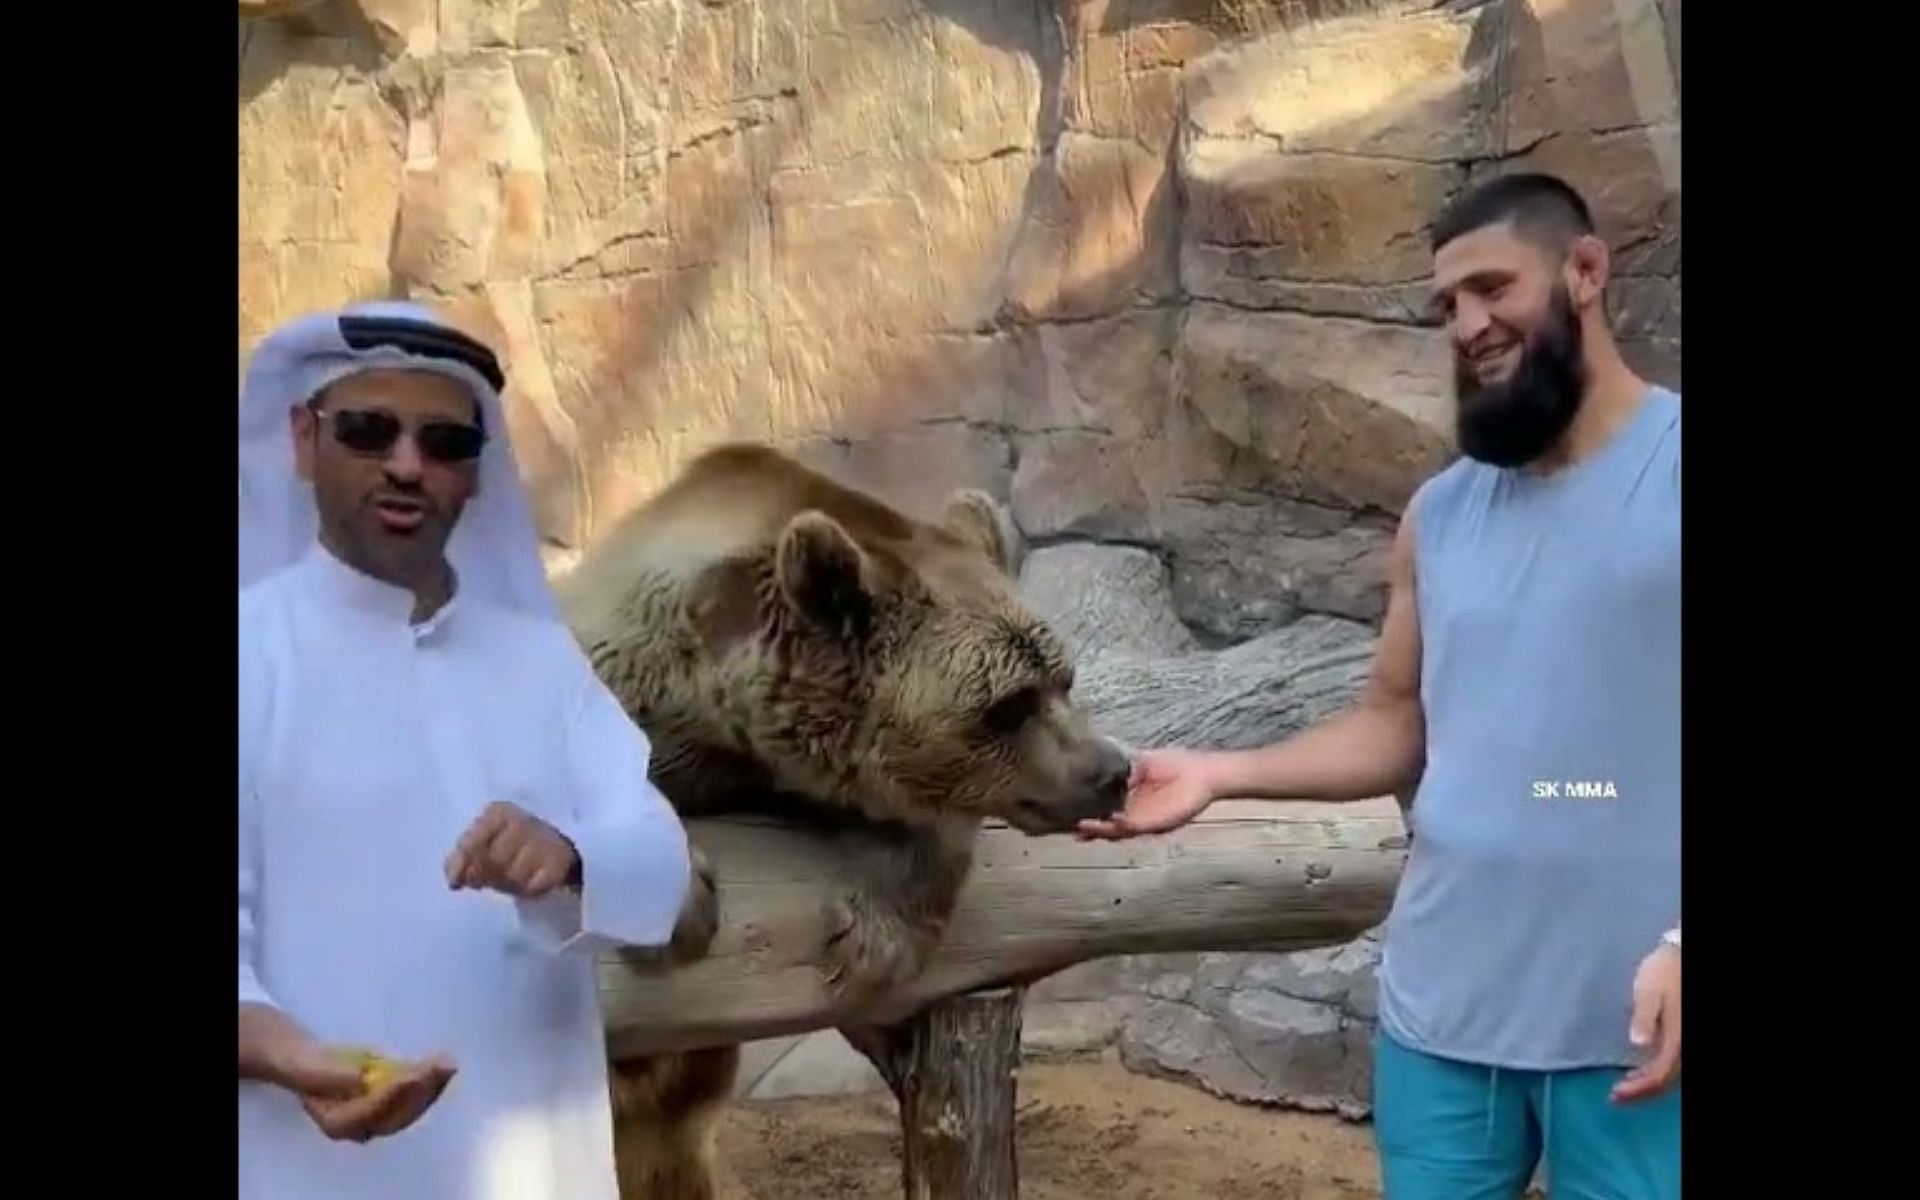 Khamzat Chimaev feeding a bear (Image courtesy - sk mma on YouTube)